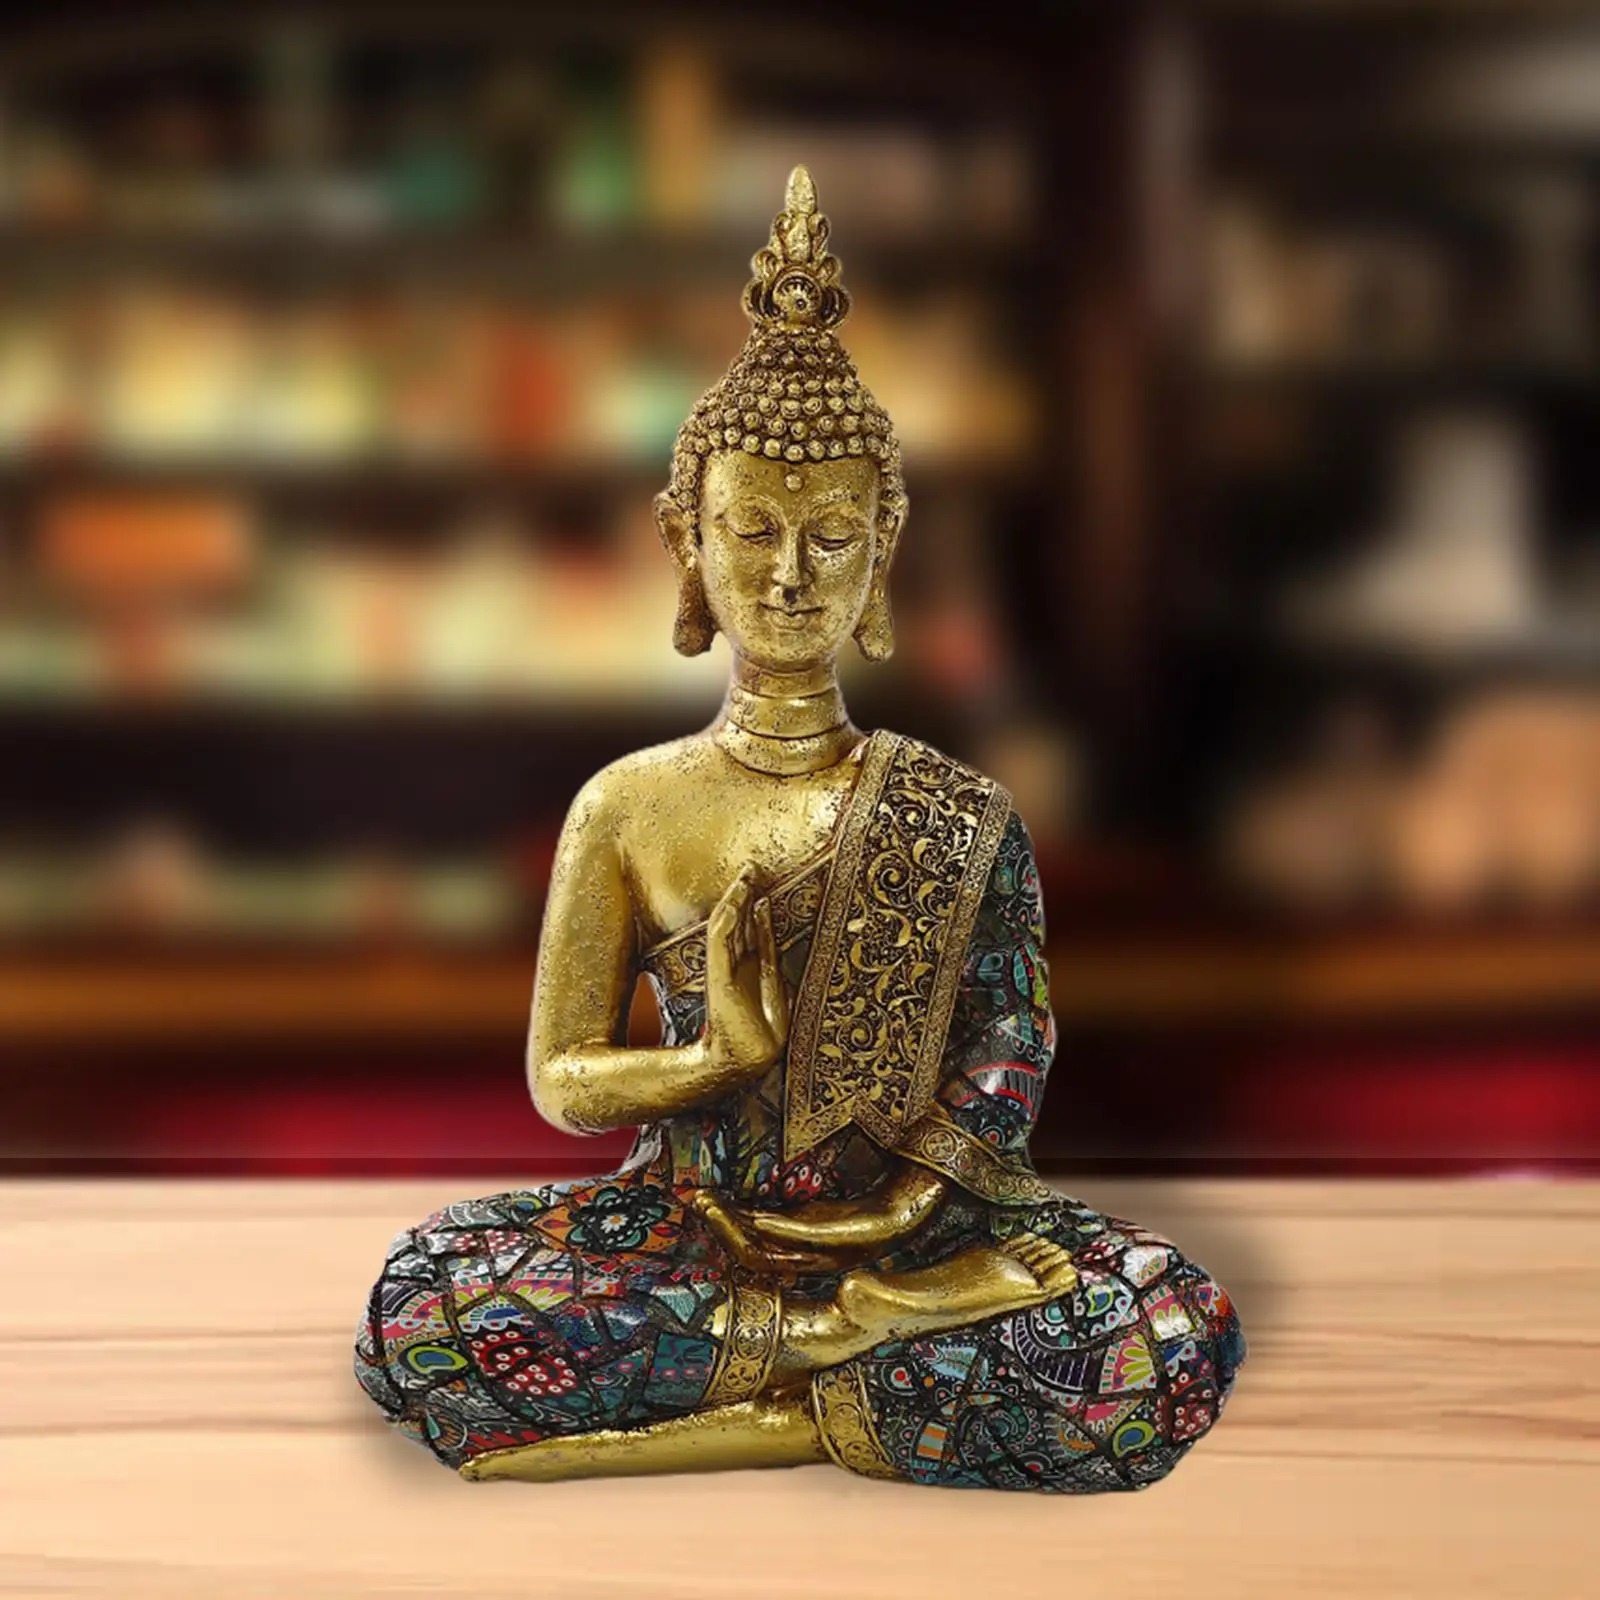 Seated Buddha Statue Zen Sculpture Sitting Figurines Spiritual Artwork Craft